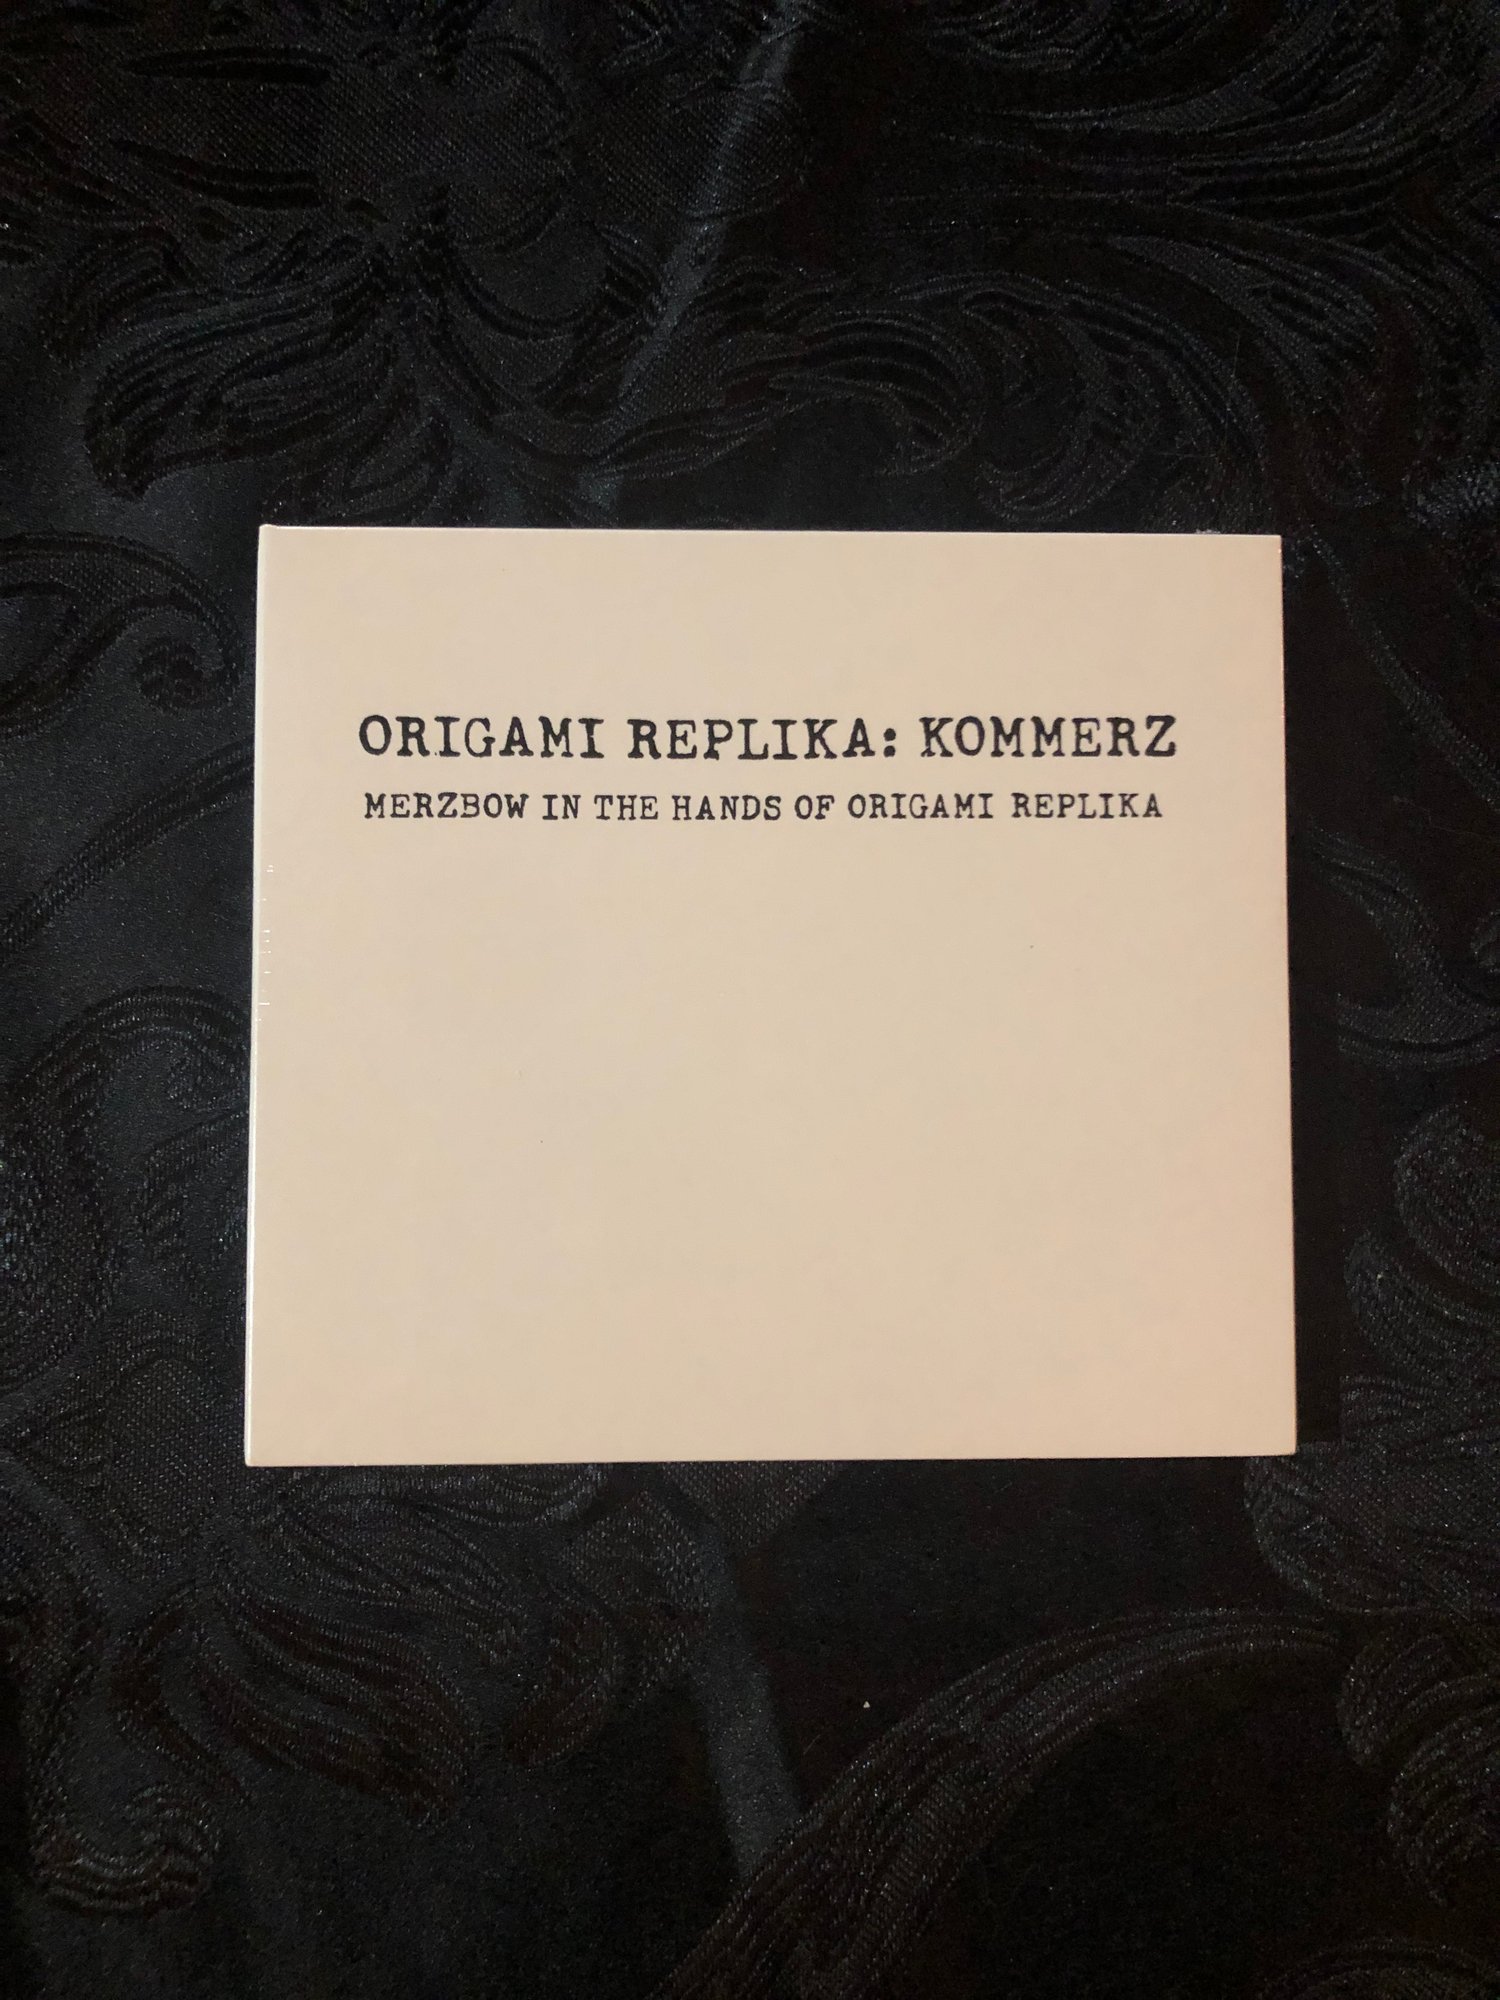 Origami Replika - Kommerz: Merzbow In The Hands of Origami Replika CD (Segerhuva)